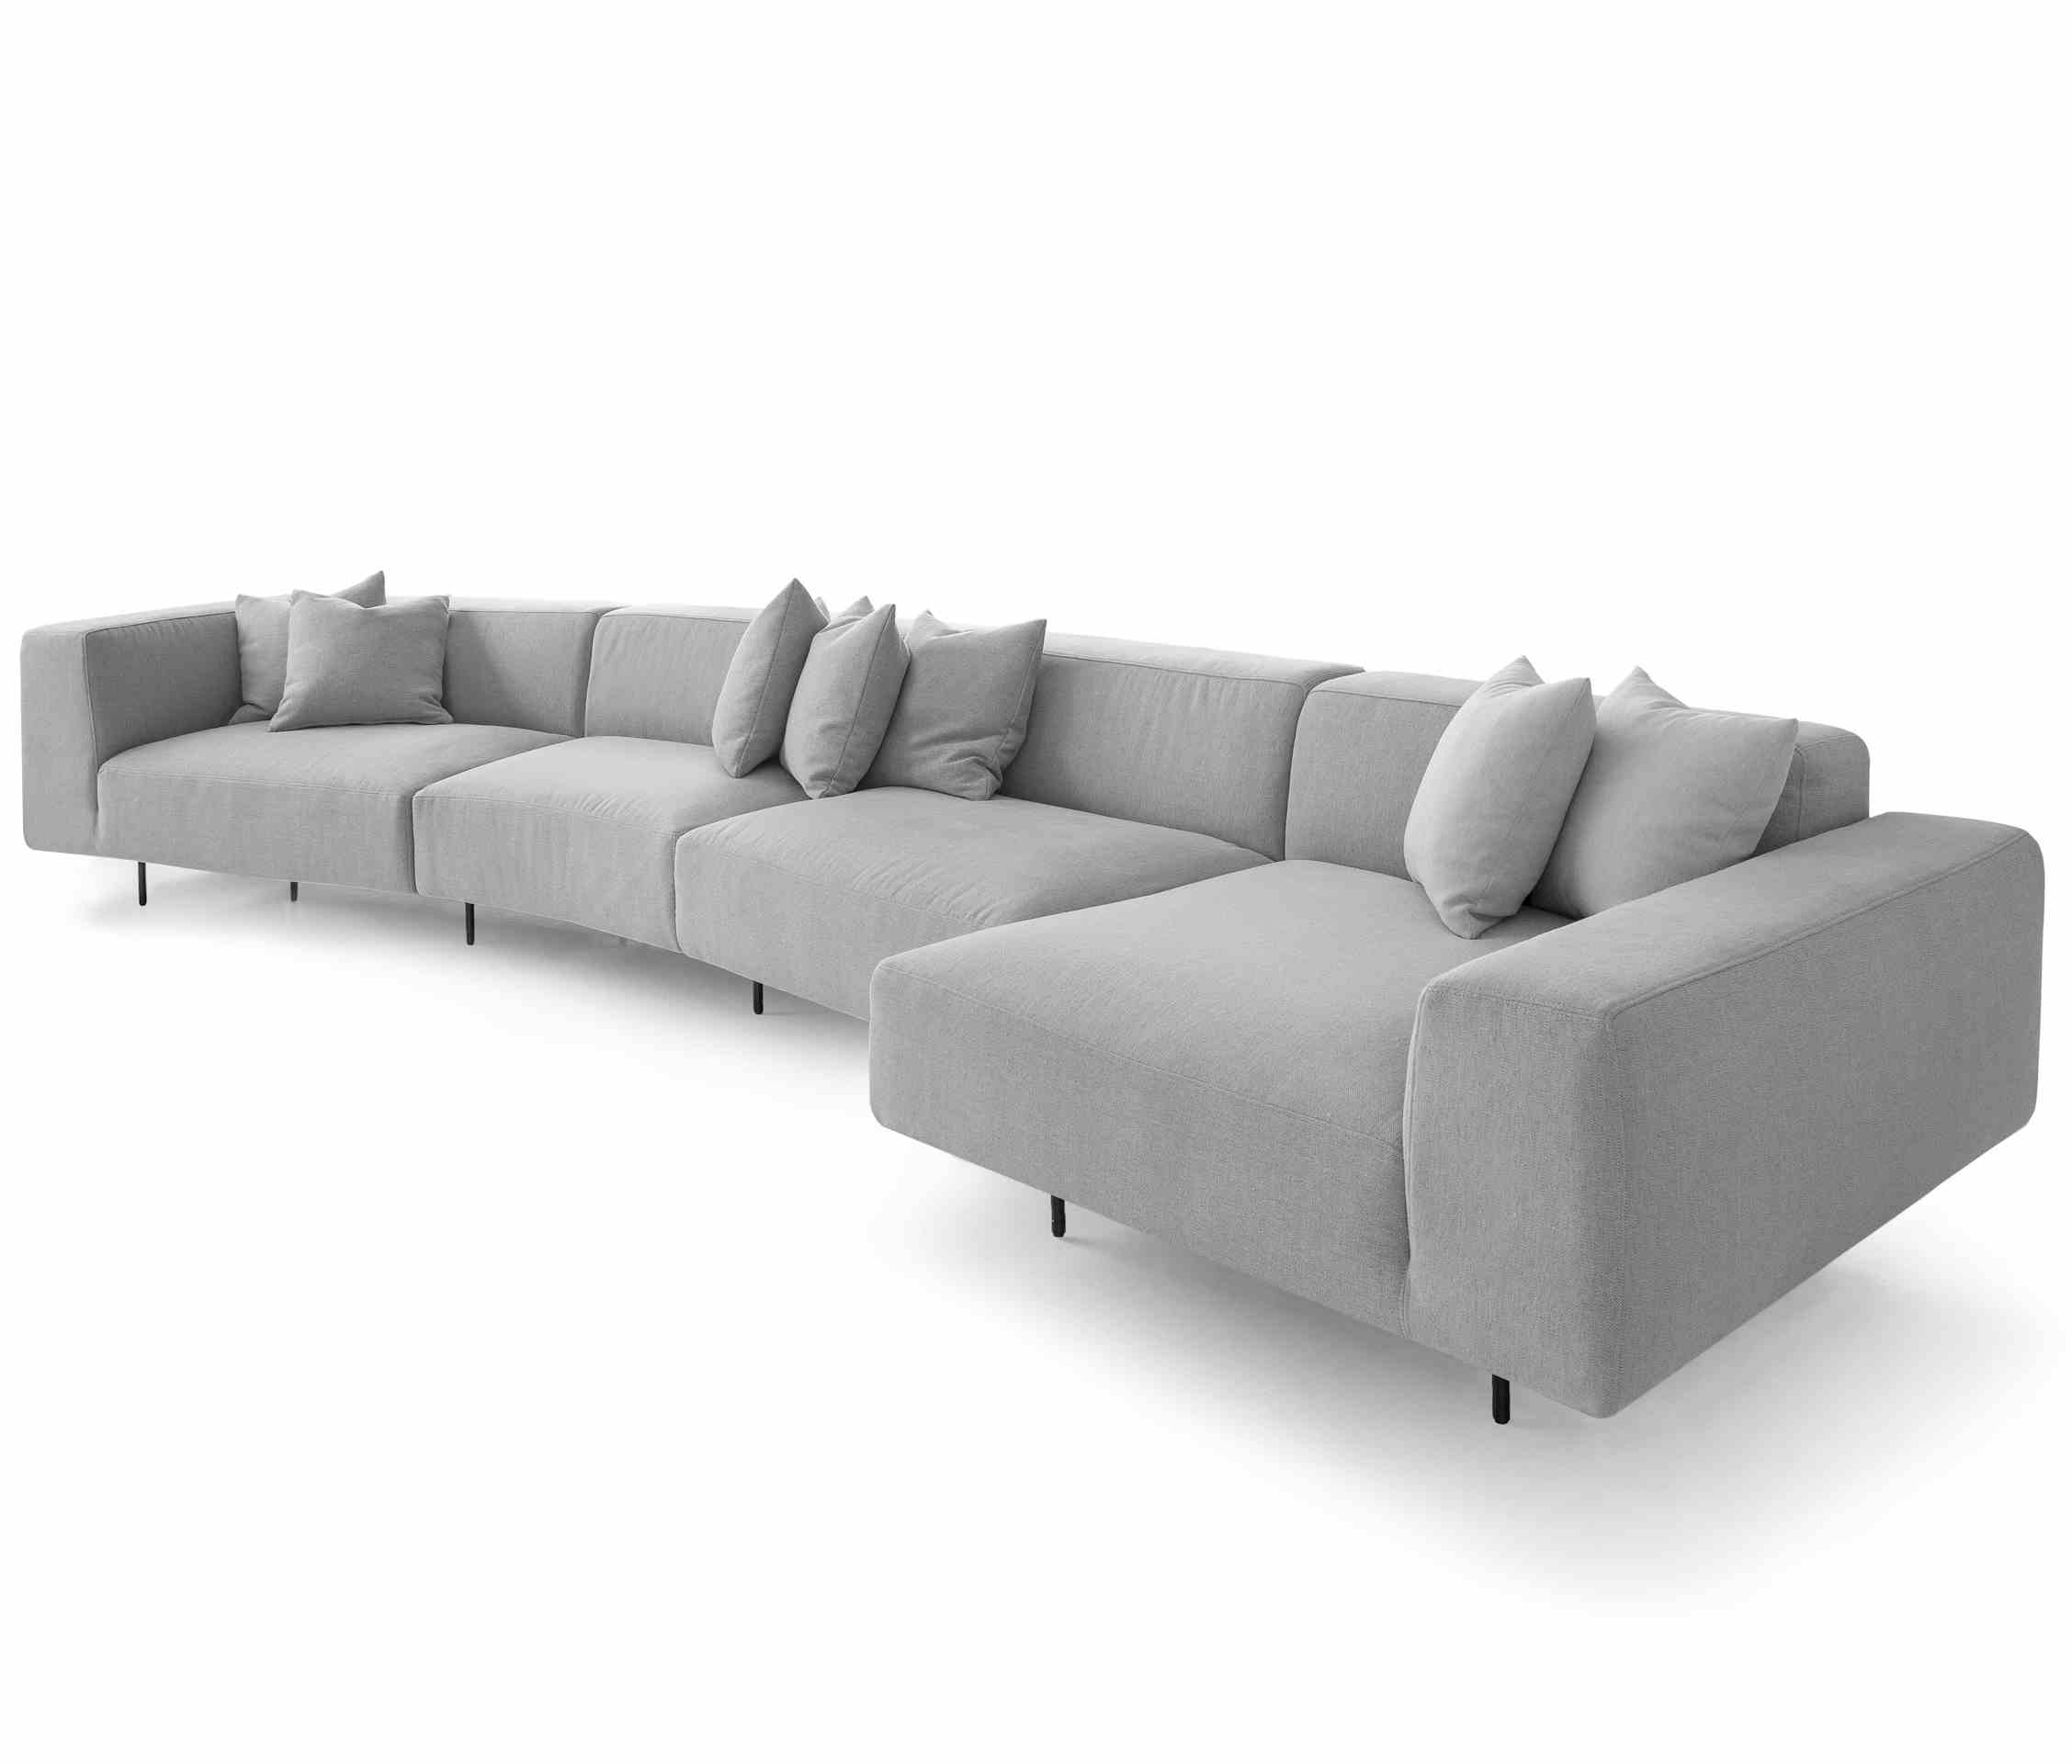 Bensen furniture endless sofa grey side haute living